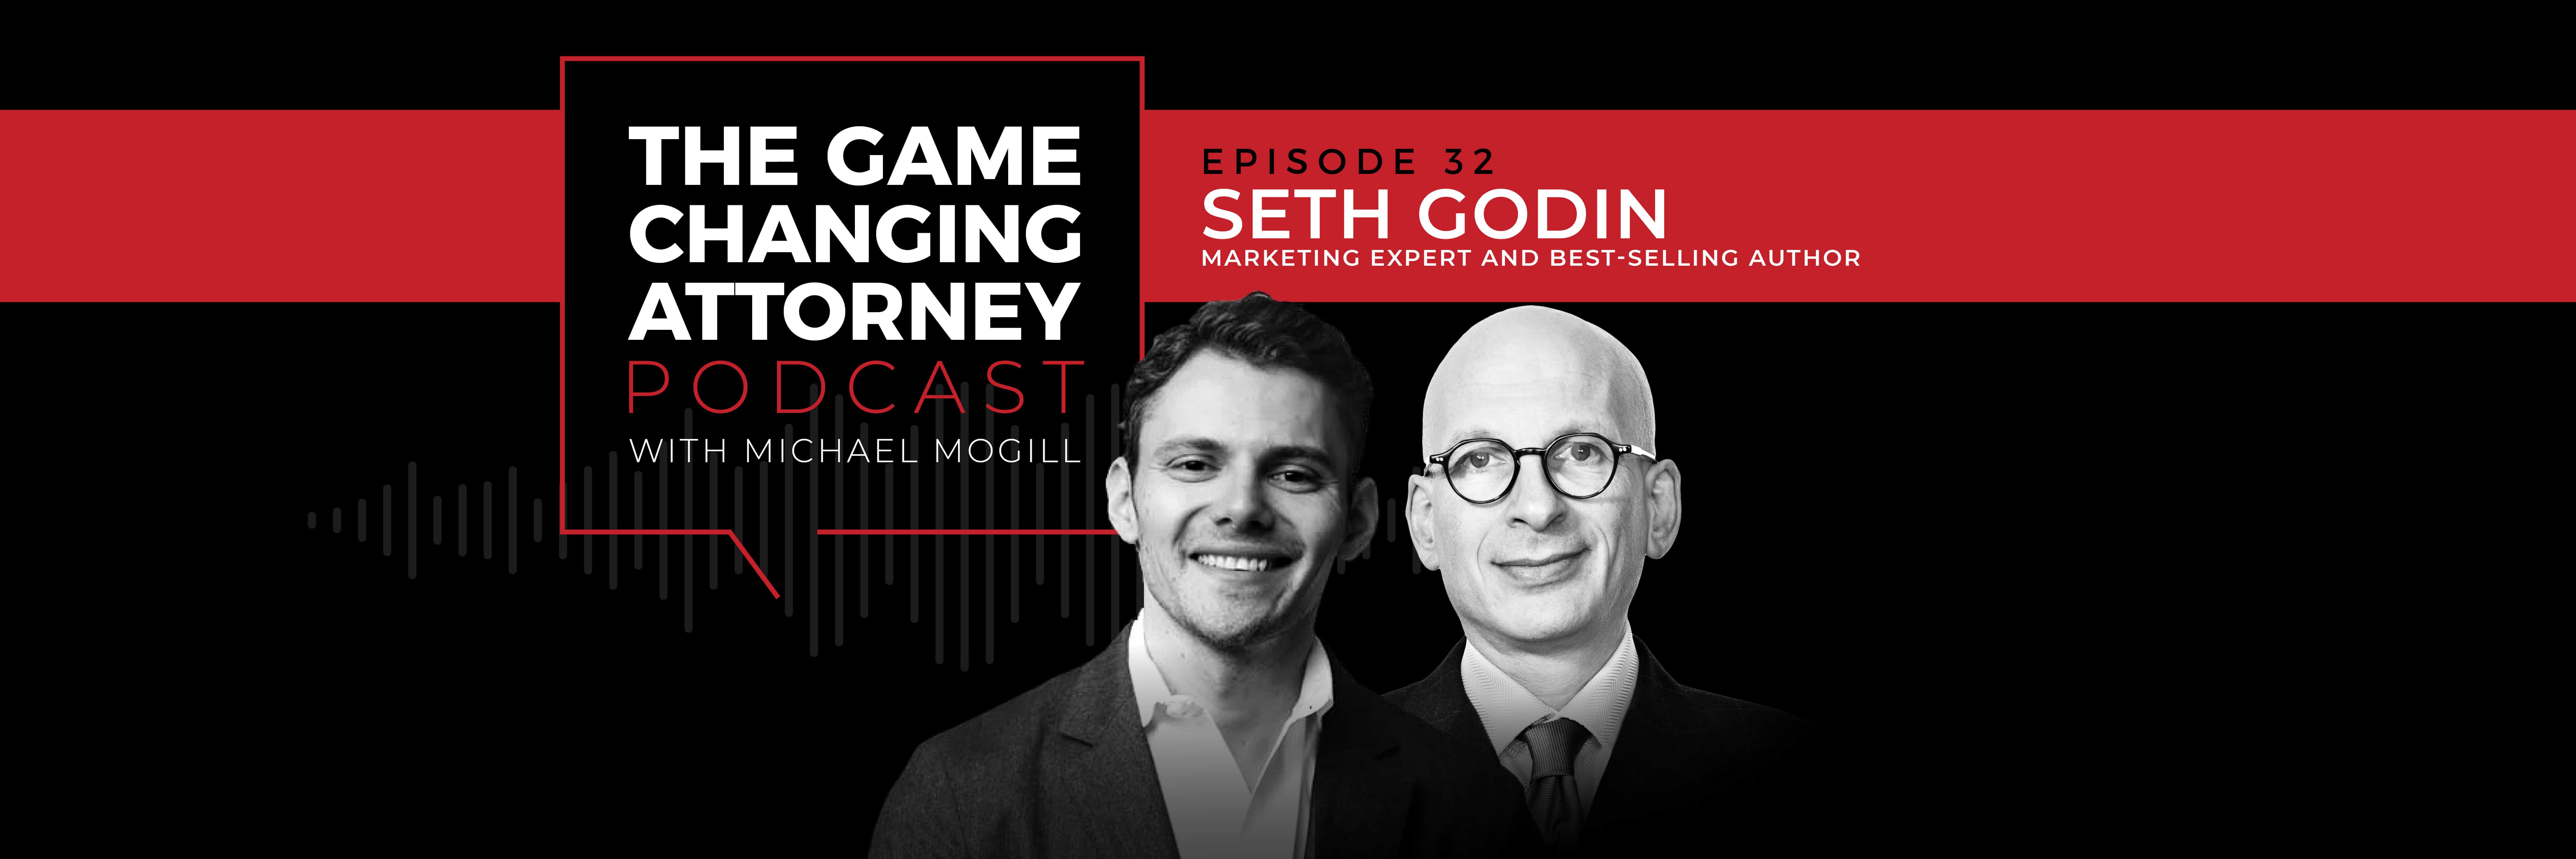 Seth Godin - The Game Changing Attorney Podcast - Desktop